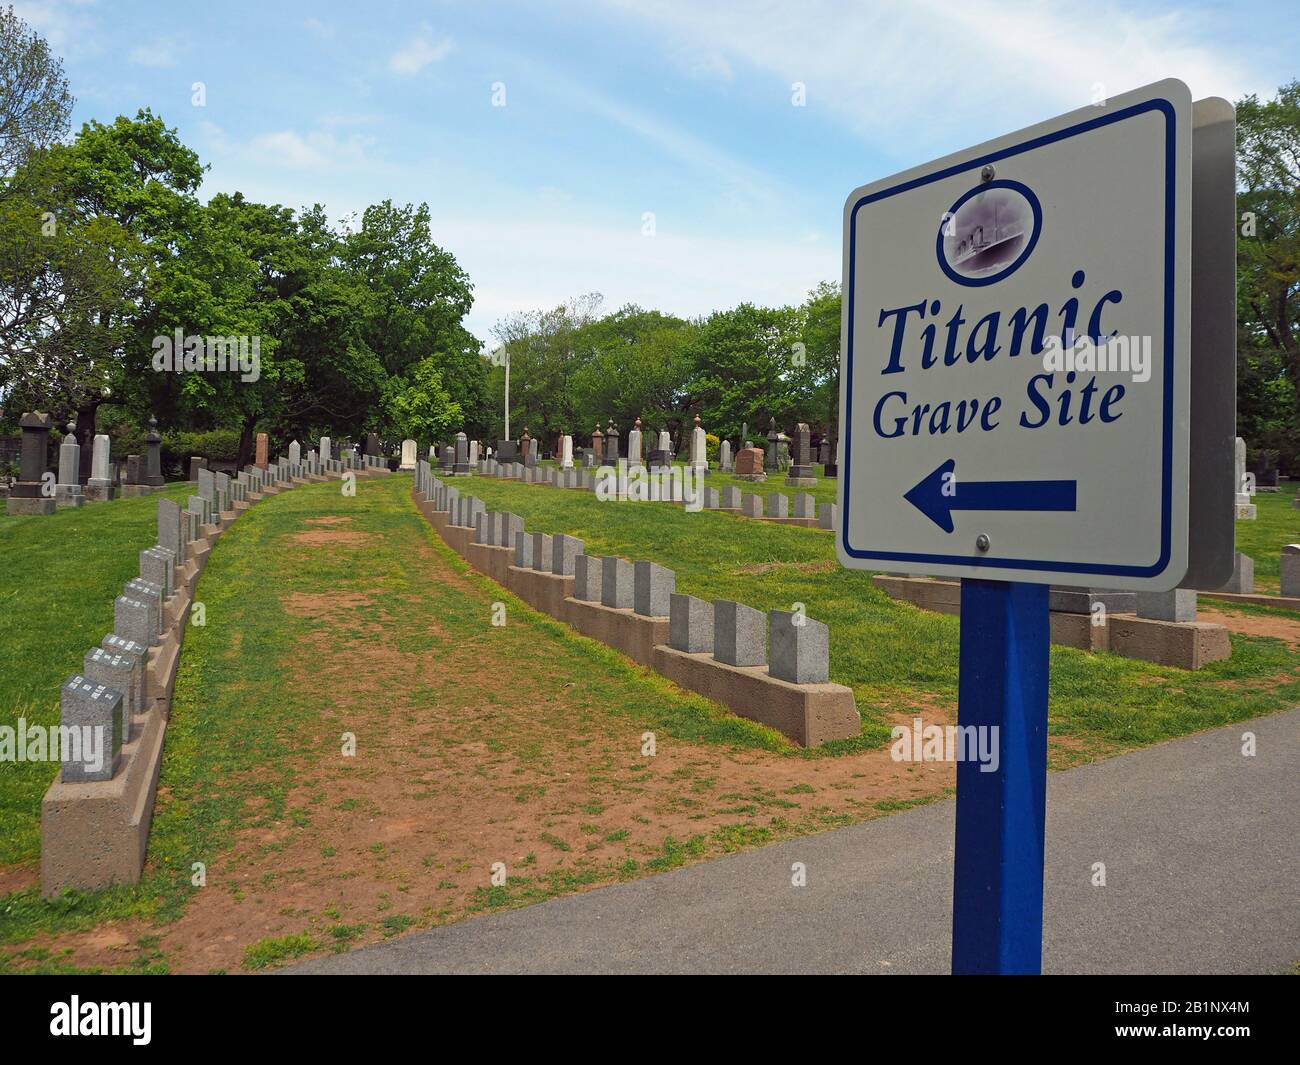 Titanic grave site, Fairview Lawn Cemetery, Halifax, Nova Scotia, Canada Stock Photo